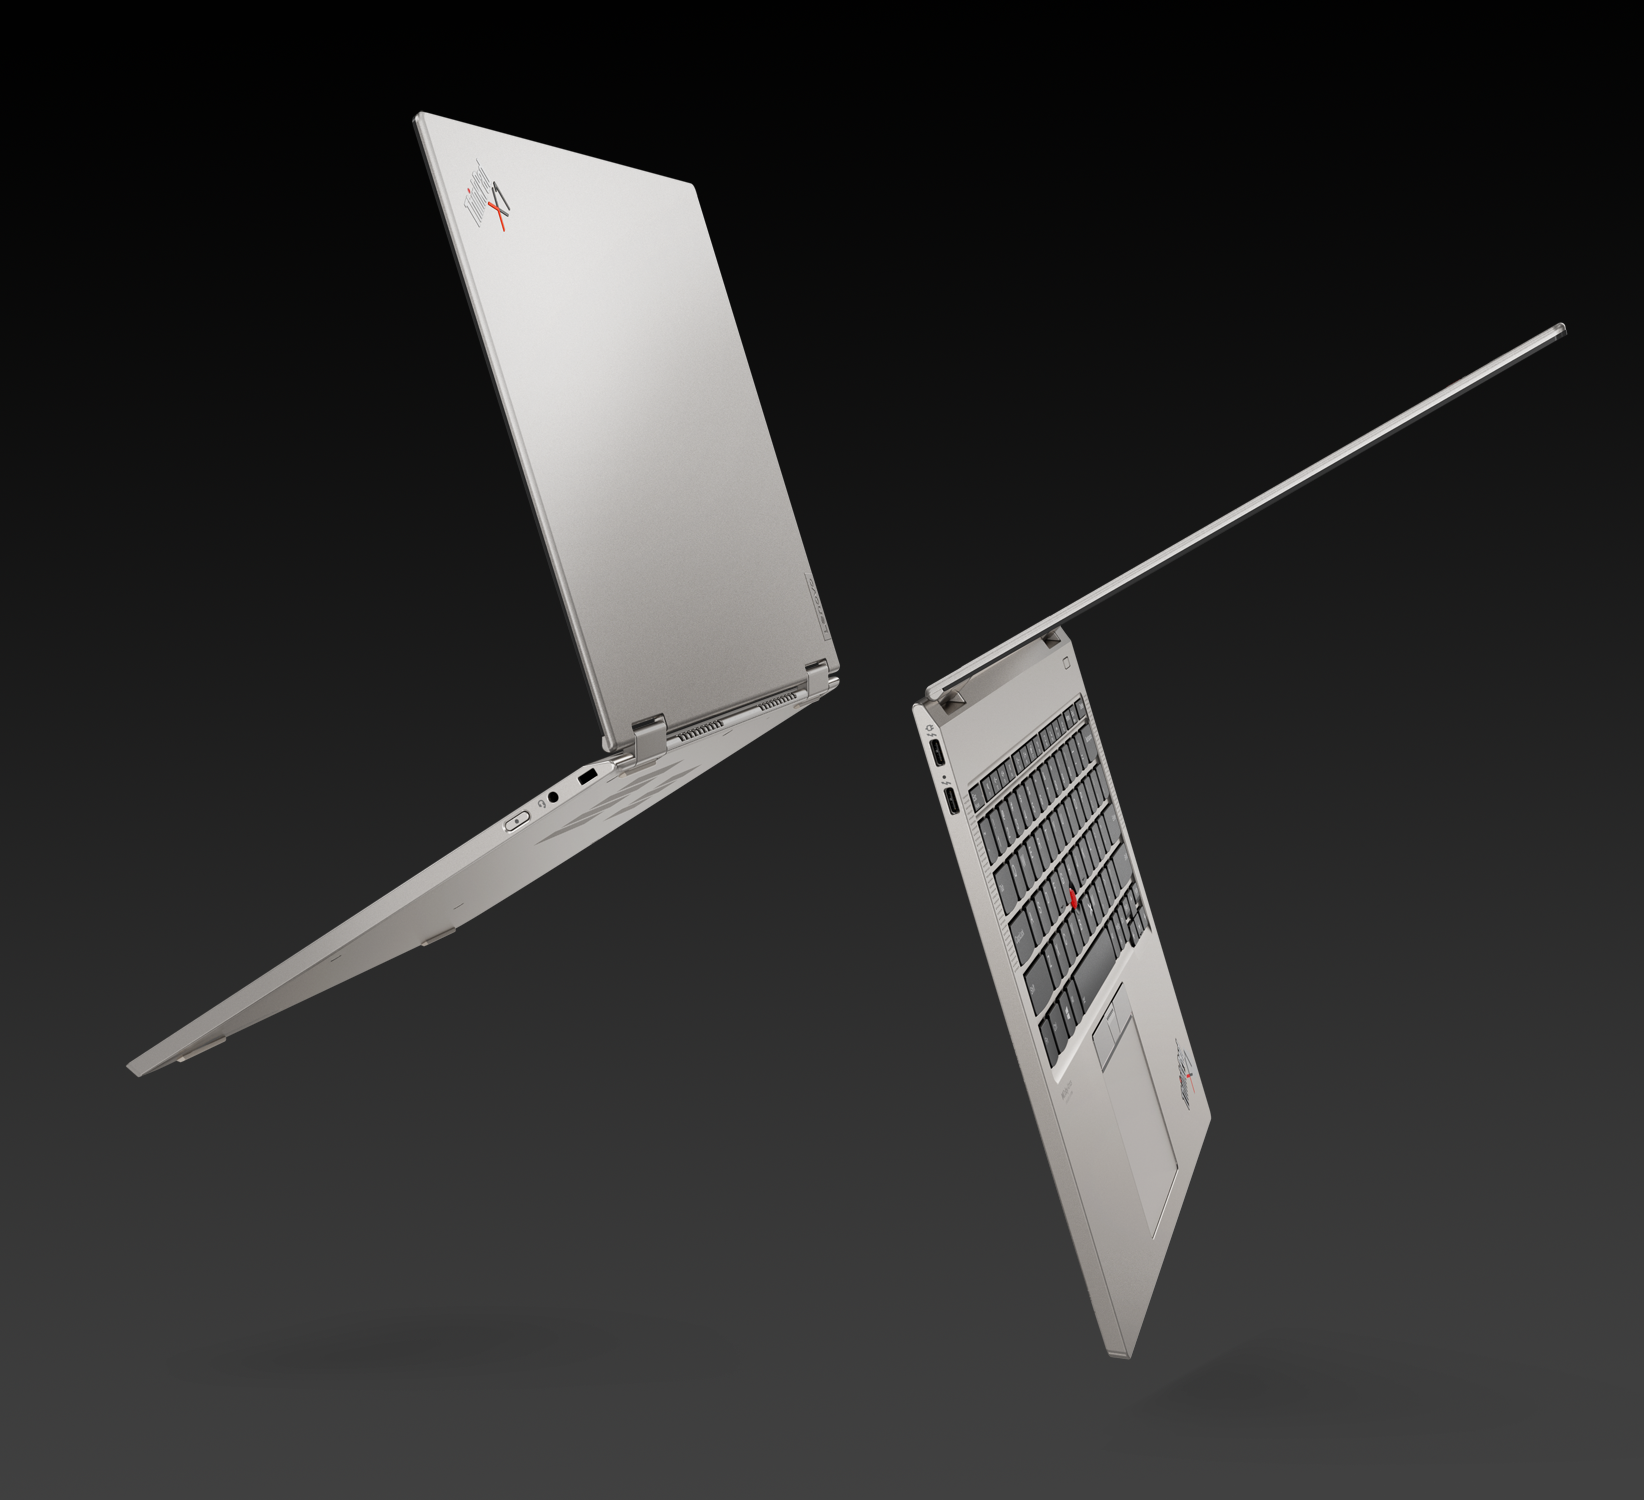 Lenovo ThinkPad X1 Titanium Yoga is the first 3: 2 Yoga convertible and thinnest ThinkPad yet